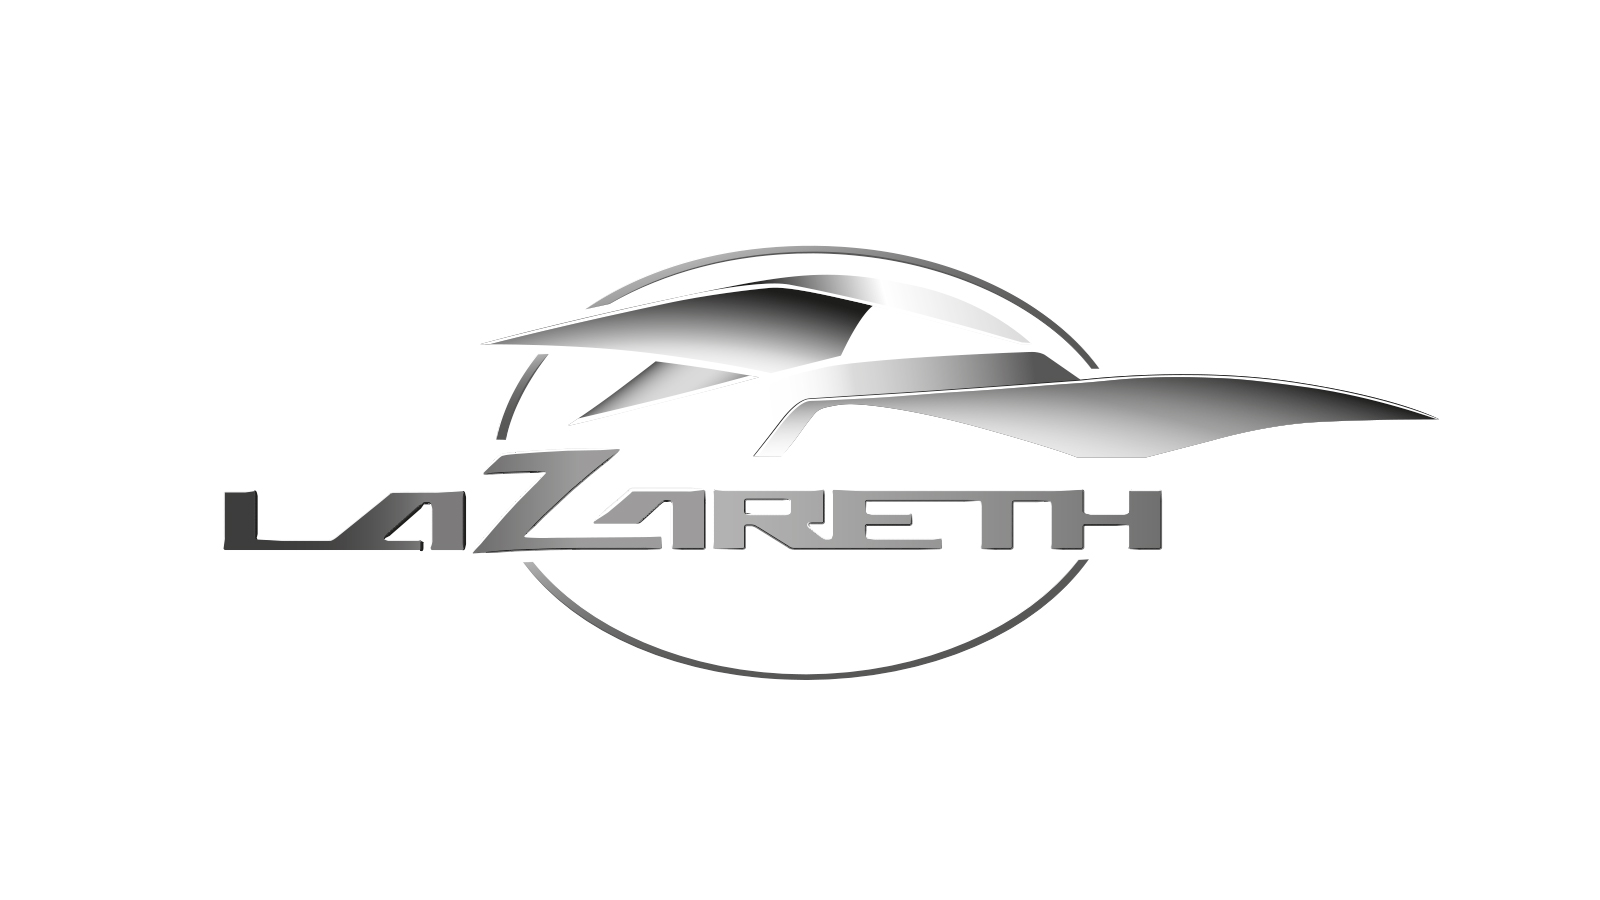 Logo_lazareth_1.jpg